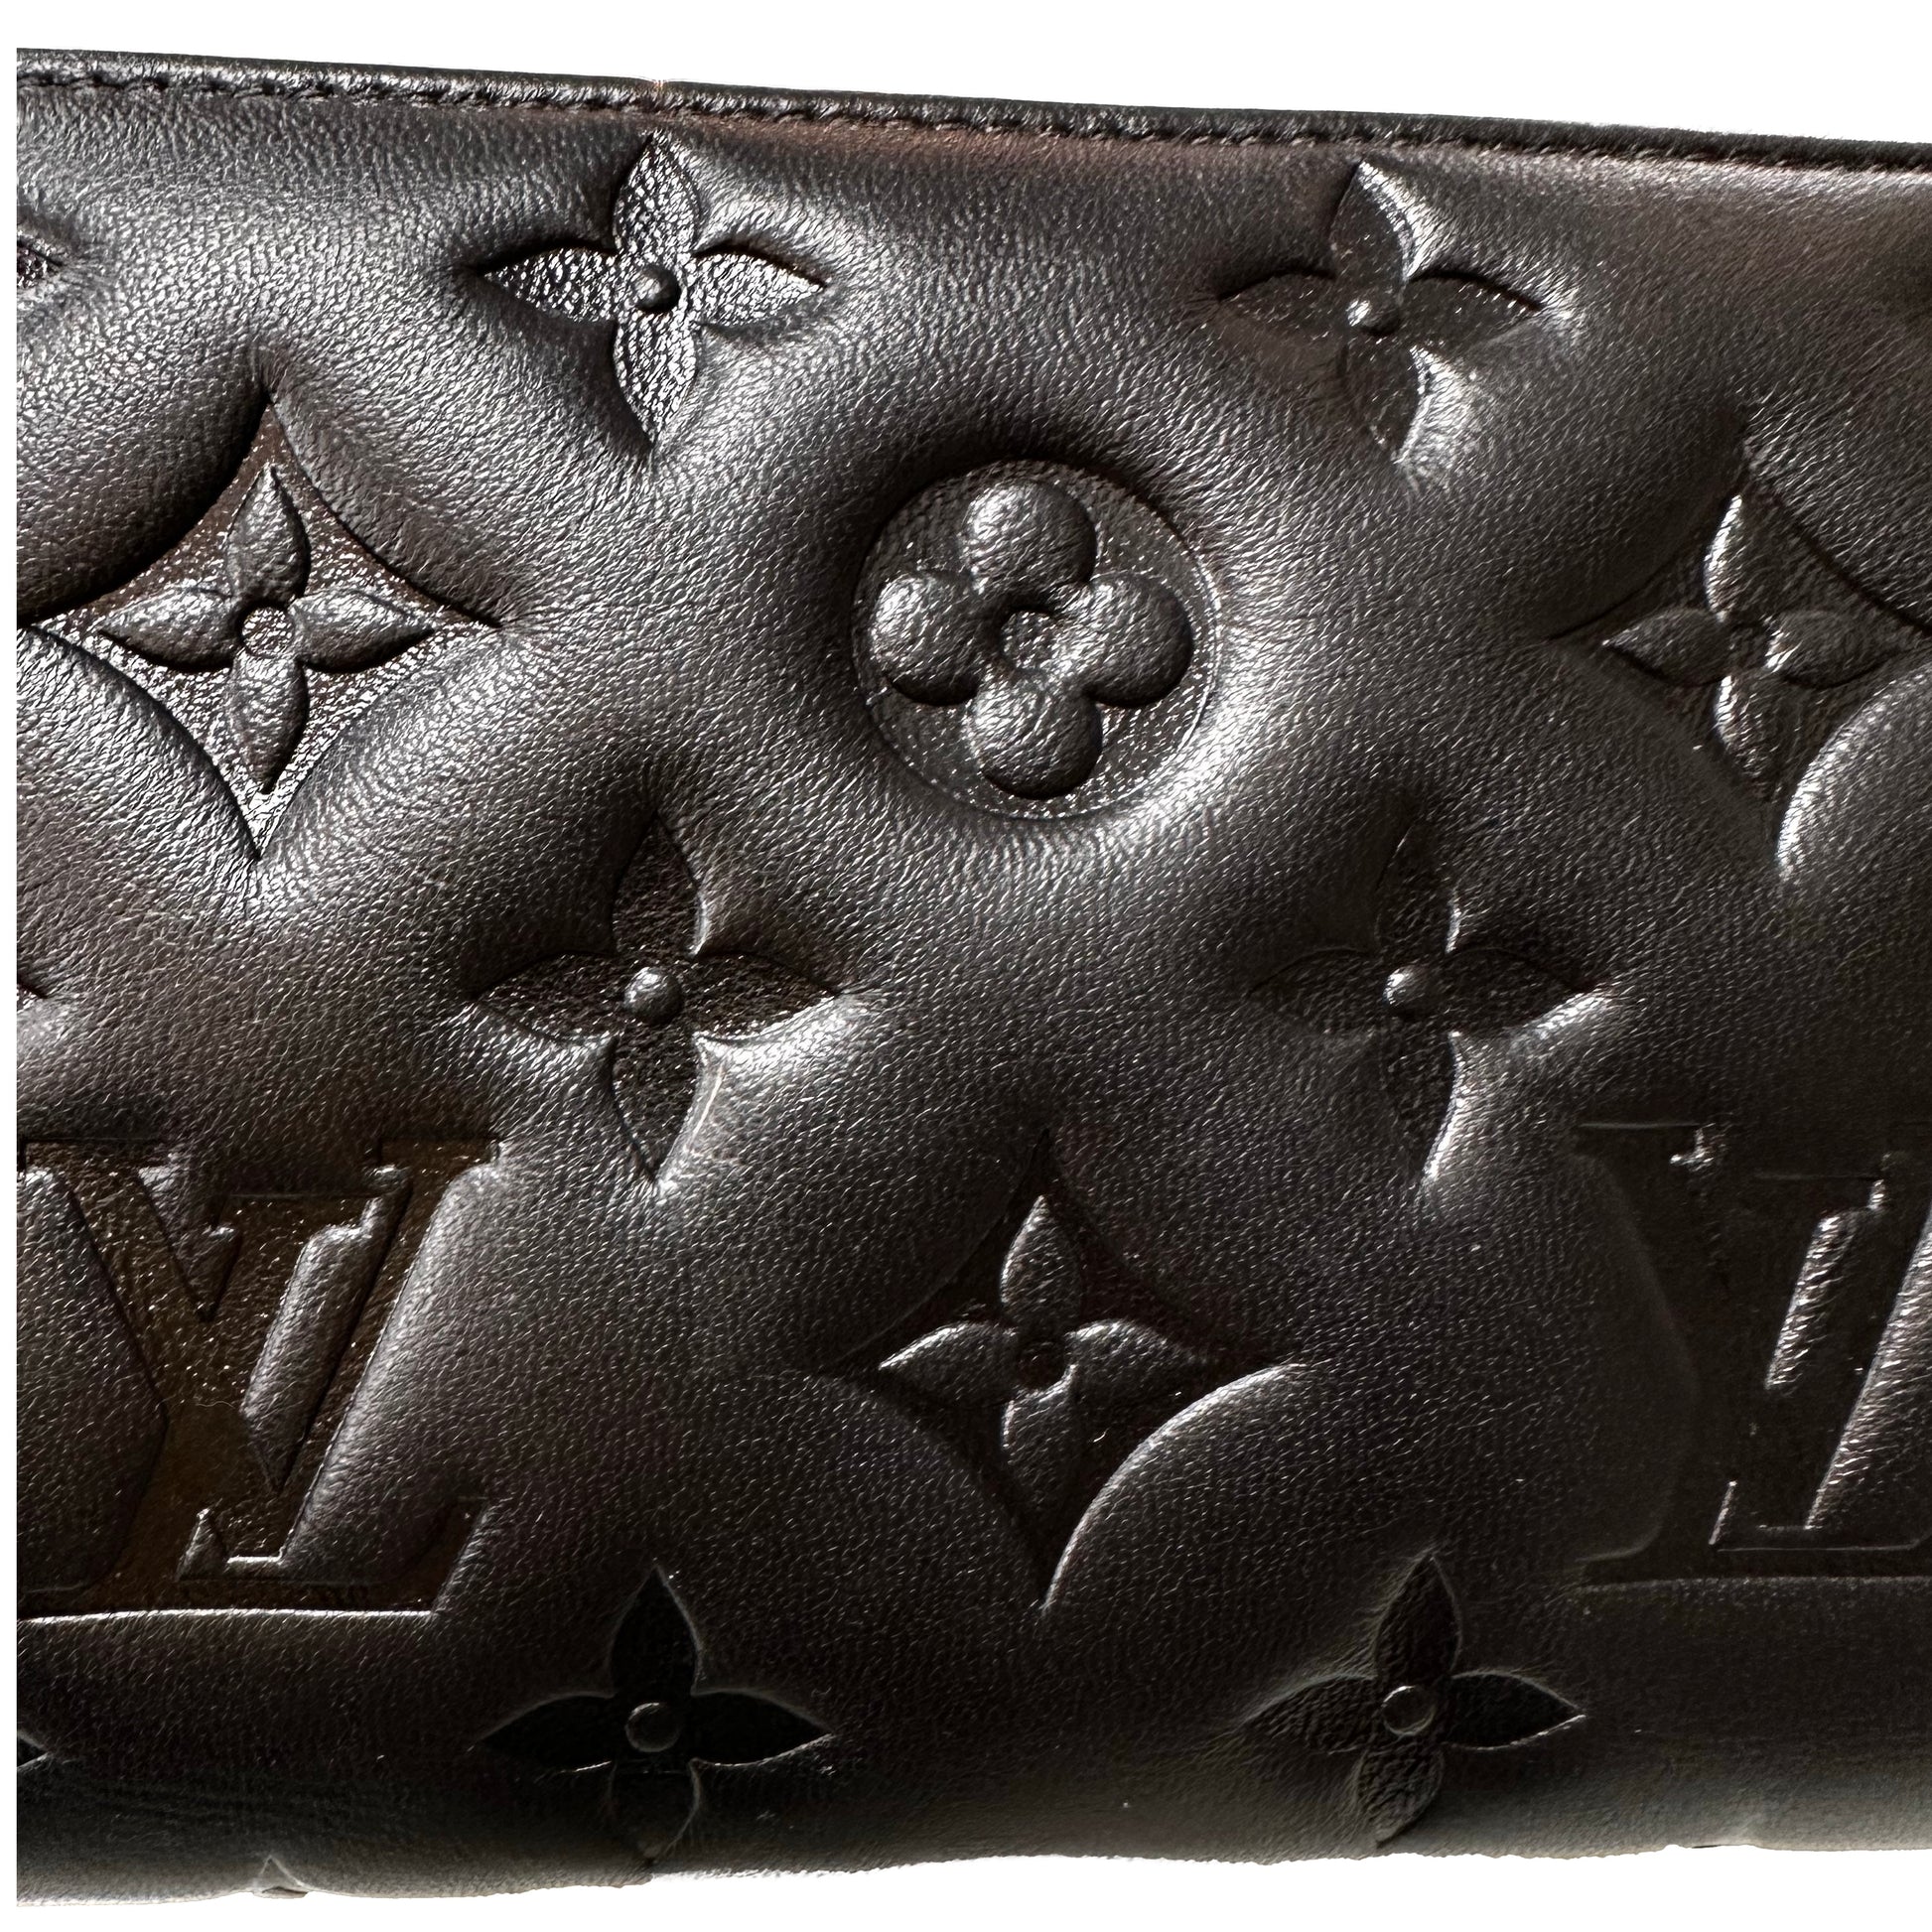 Louis Vuitton Embossed Wallet